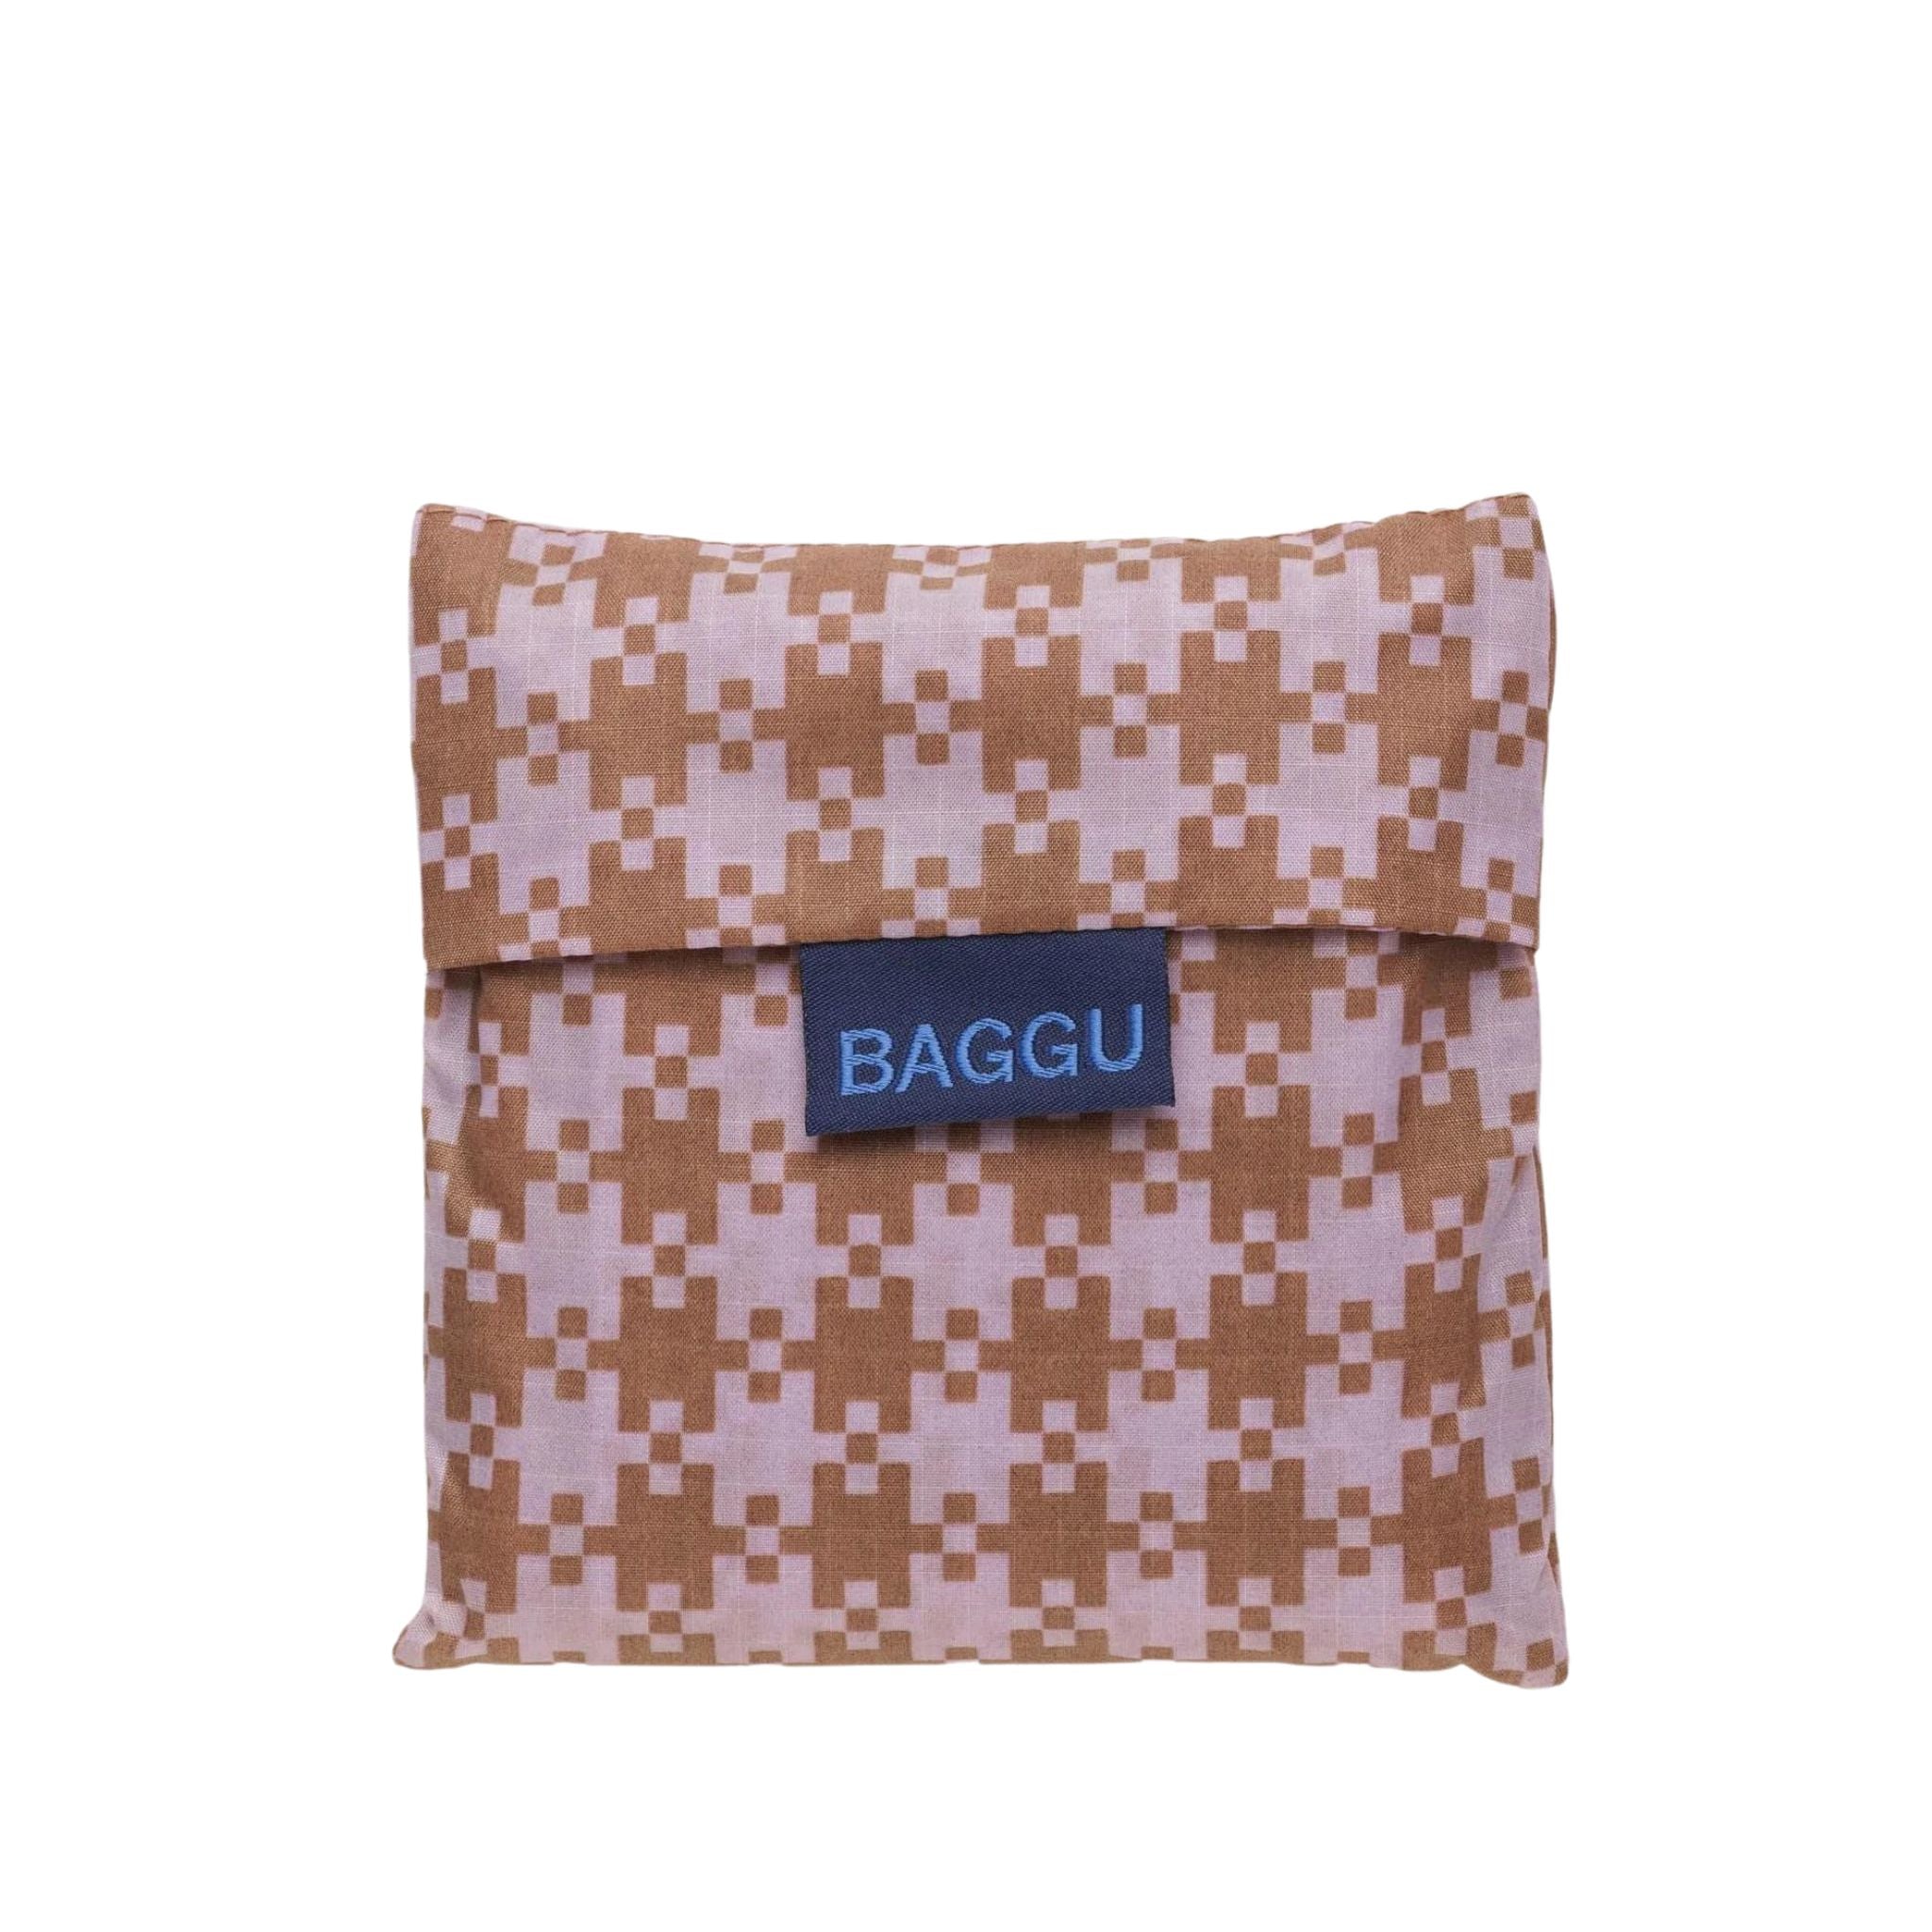 Baggu - Standard - Wavy Gingham Peach